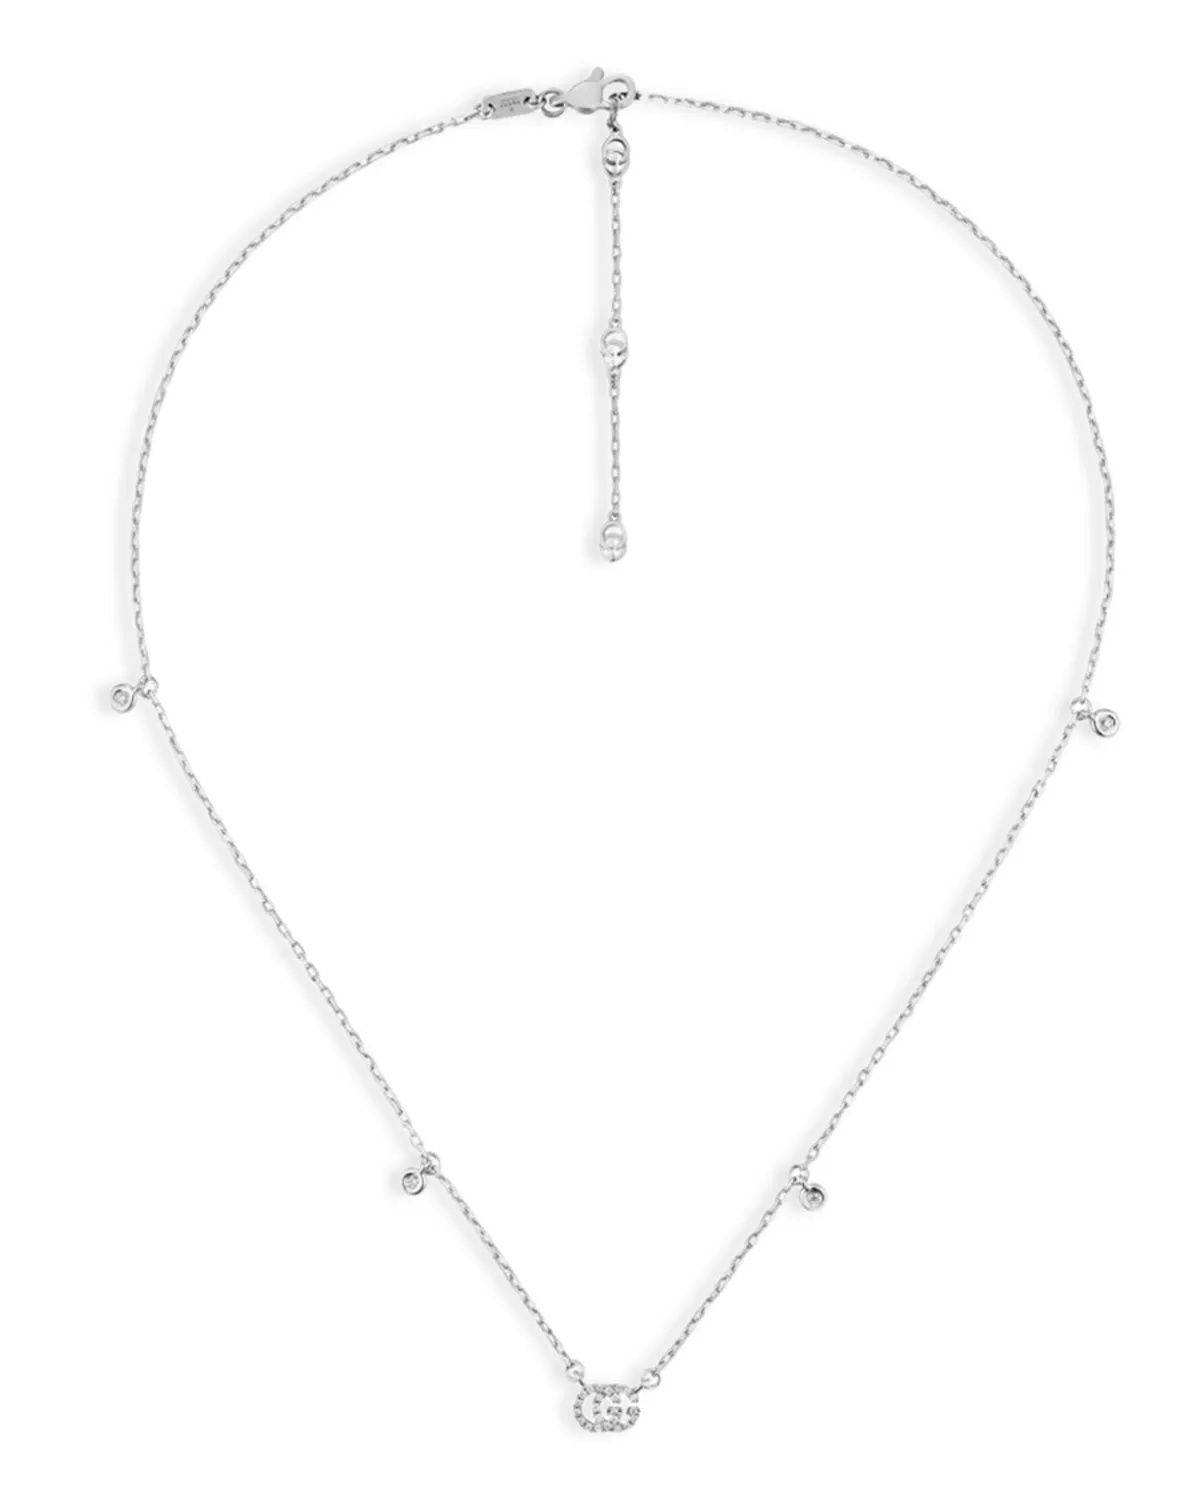 18K White Gold GG Running Chain Diamond Necklace, 14.5" - 1